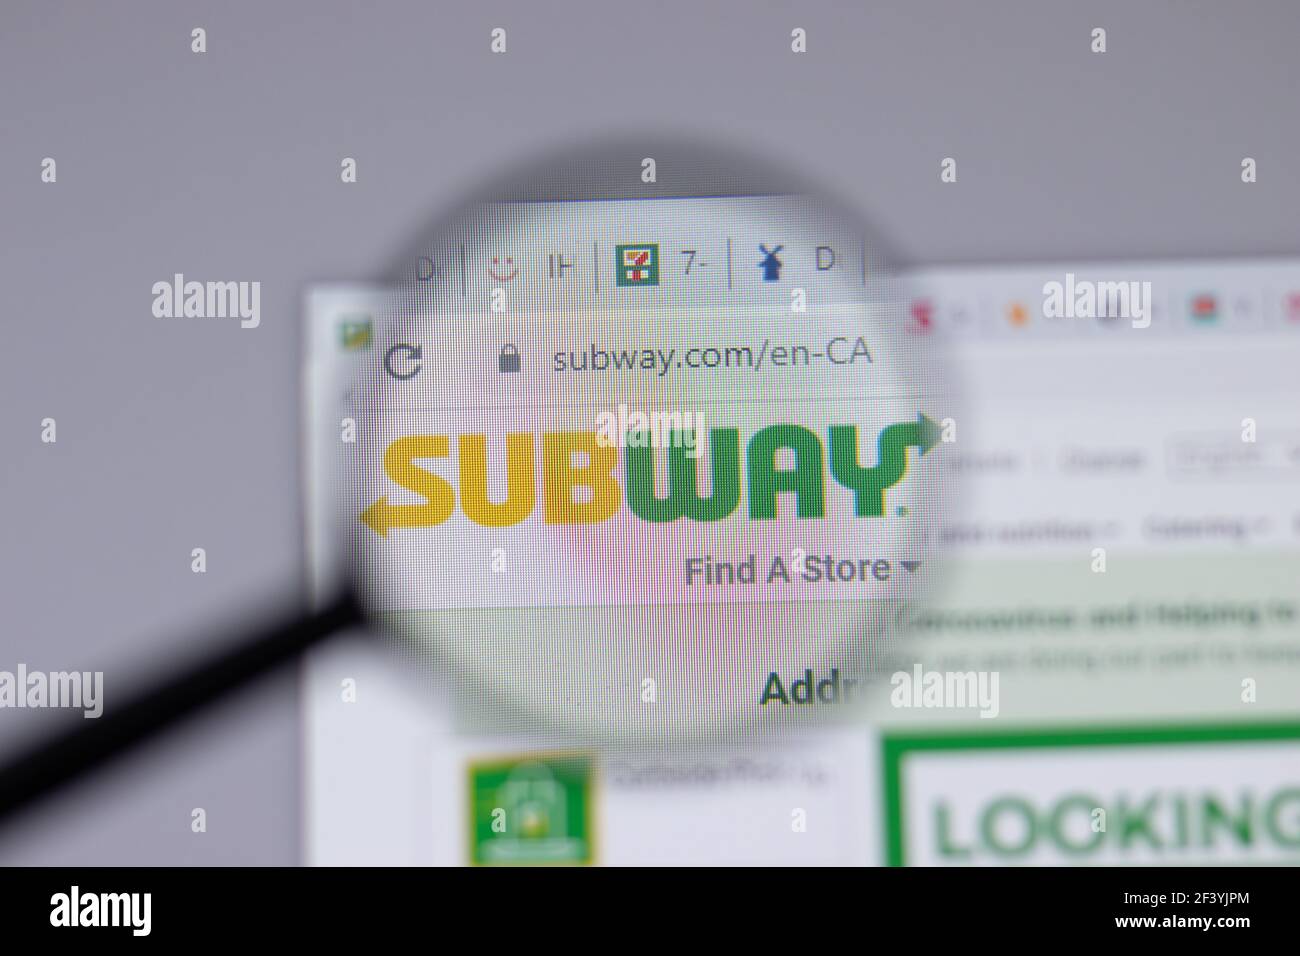 New York, USA - 18 March 2021: Subway company logo icon on website, Illustrative Editorial Stock Photo